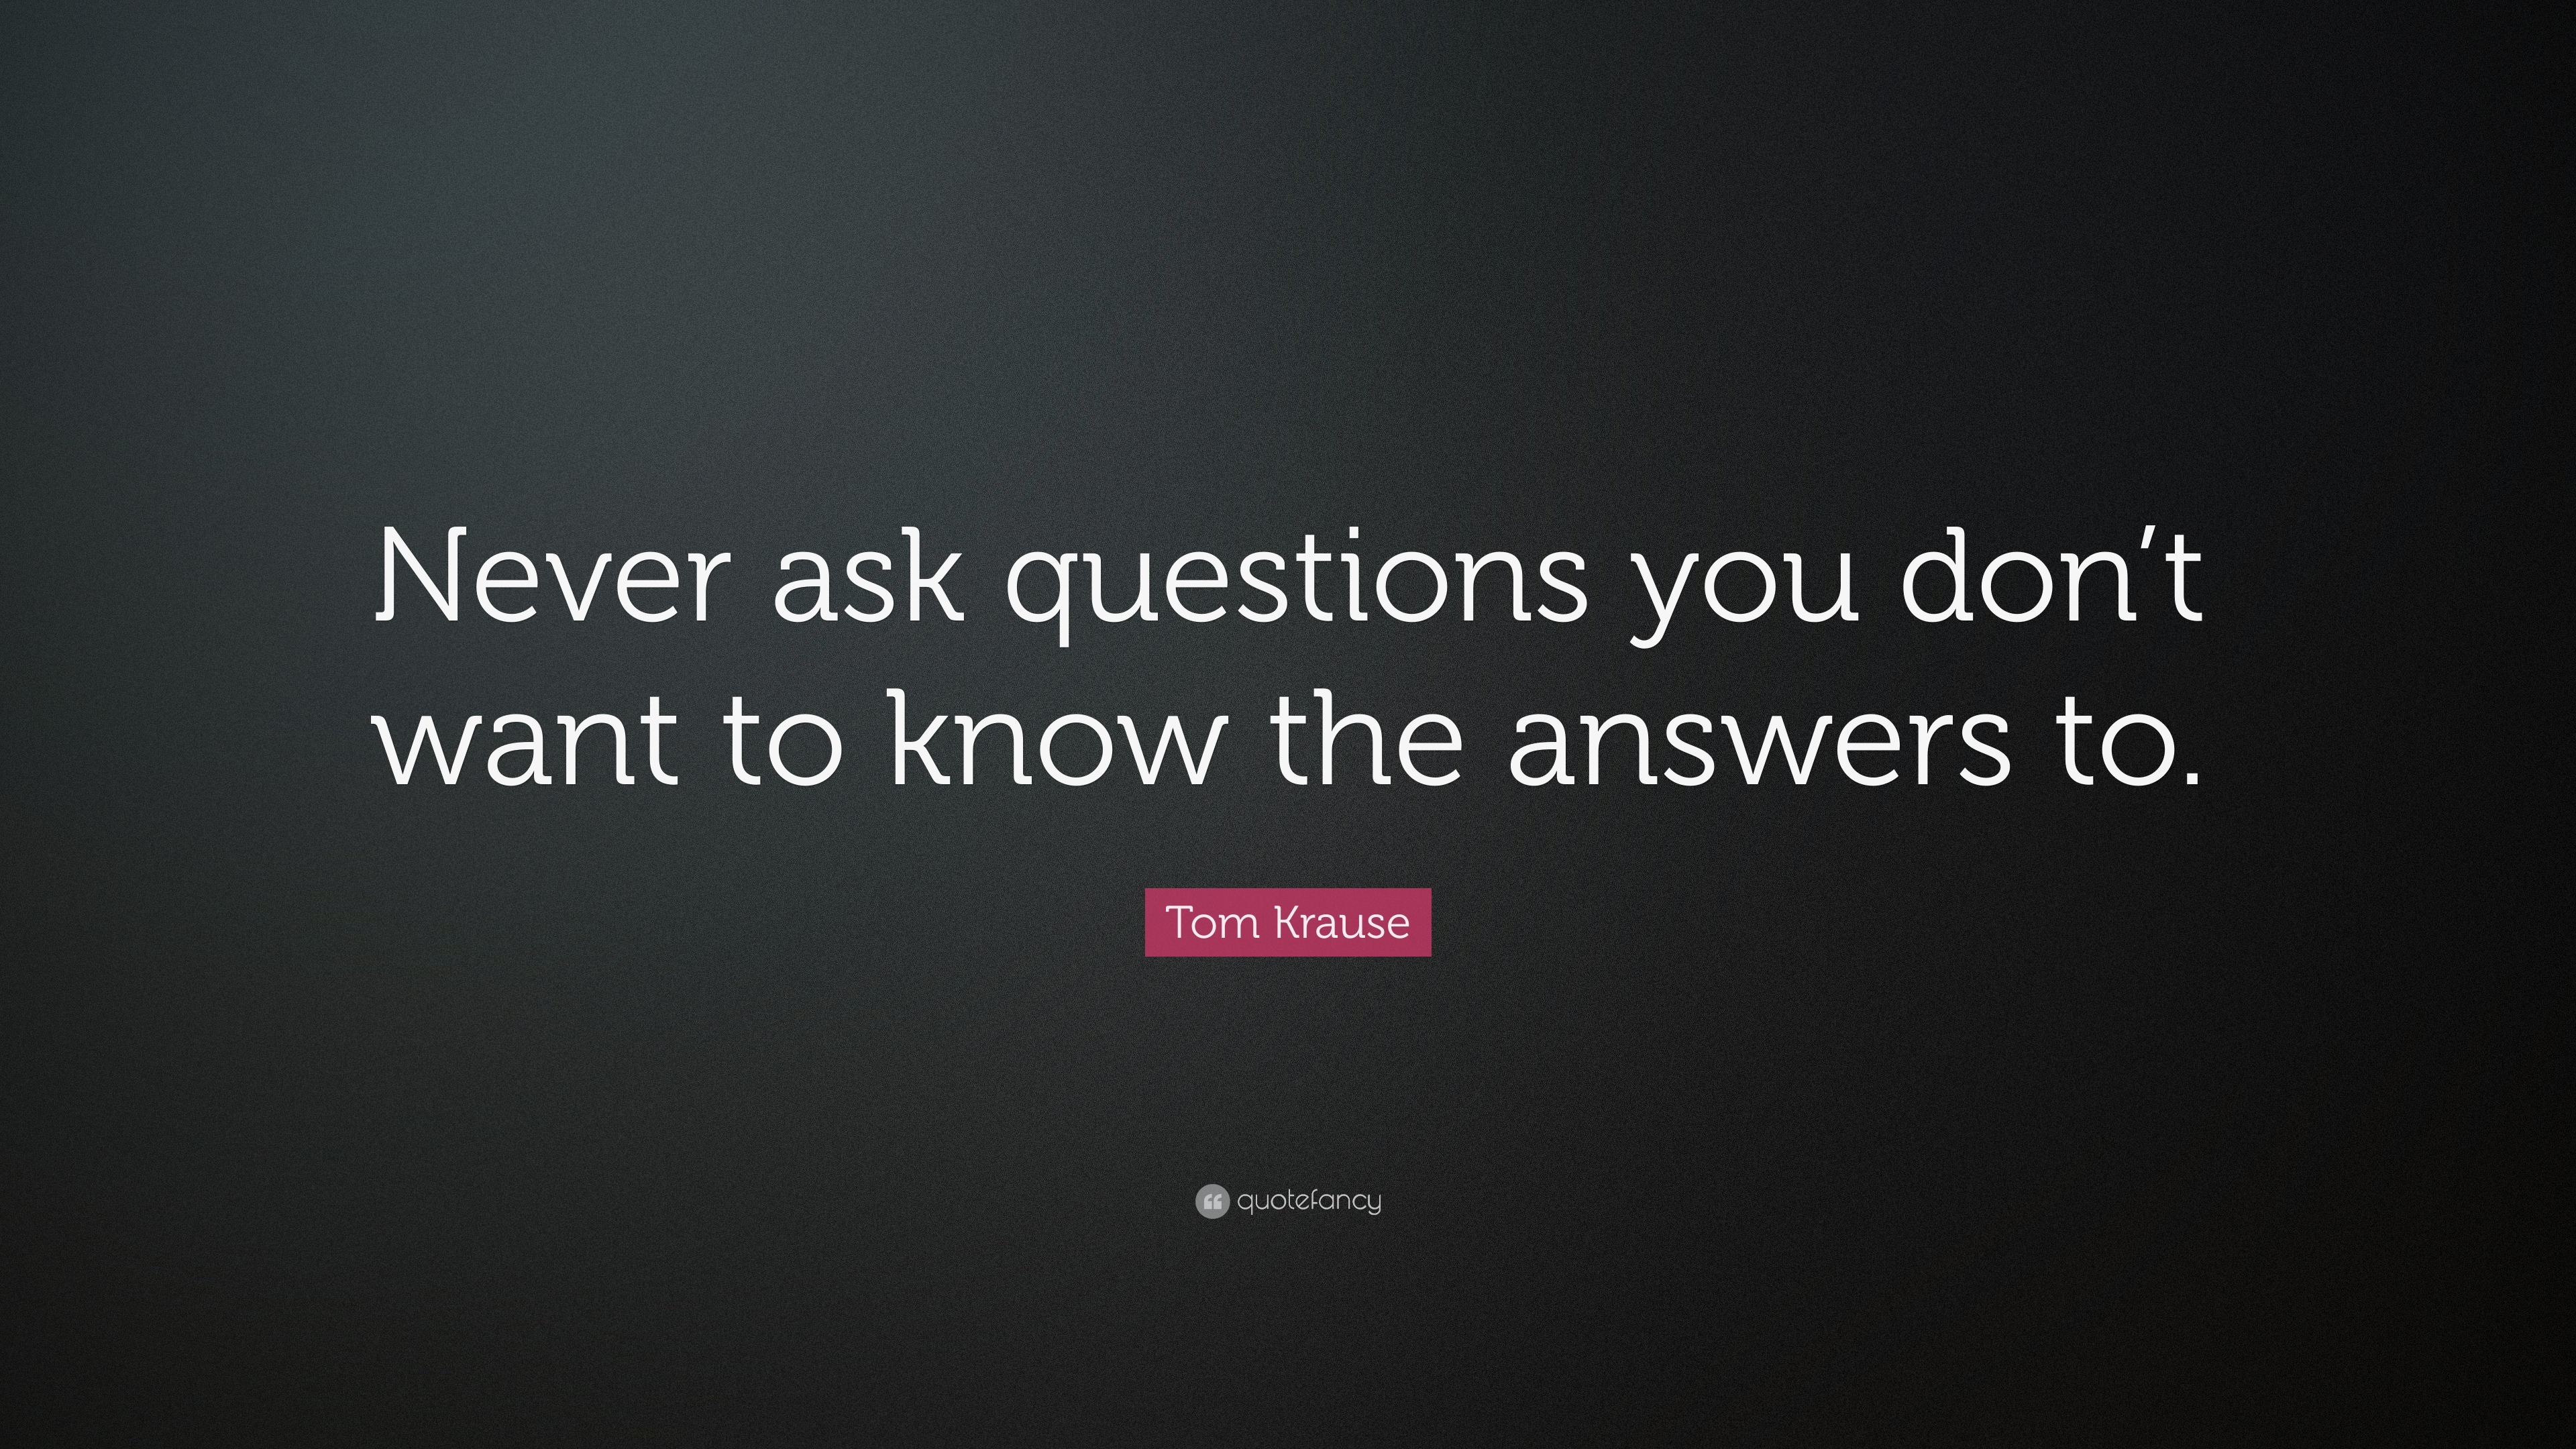 Ð ÐµÐ·ÑƒÐ»ÑŒÑ‚Ð°Ñ‚ Ð¿Ð¾ÑˆÑƒÐºÑƒ Ð·Ð¾Ð±Ñ€Ð°Ð¶ÐµÐ½ÑŒ Ð·Ð° Ð·Ð°Ð¿Ð¸Ñ‚Ð¾Ð¼ "don't ask a question you don't want an answer to"